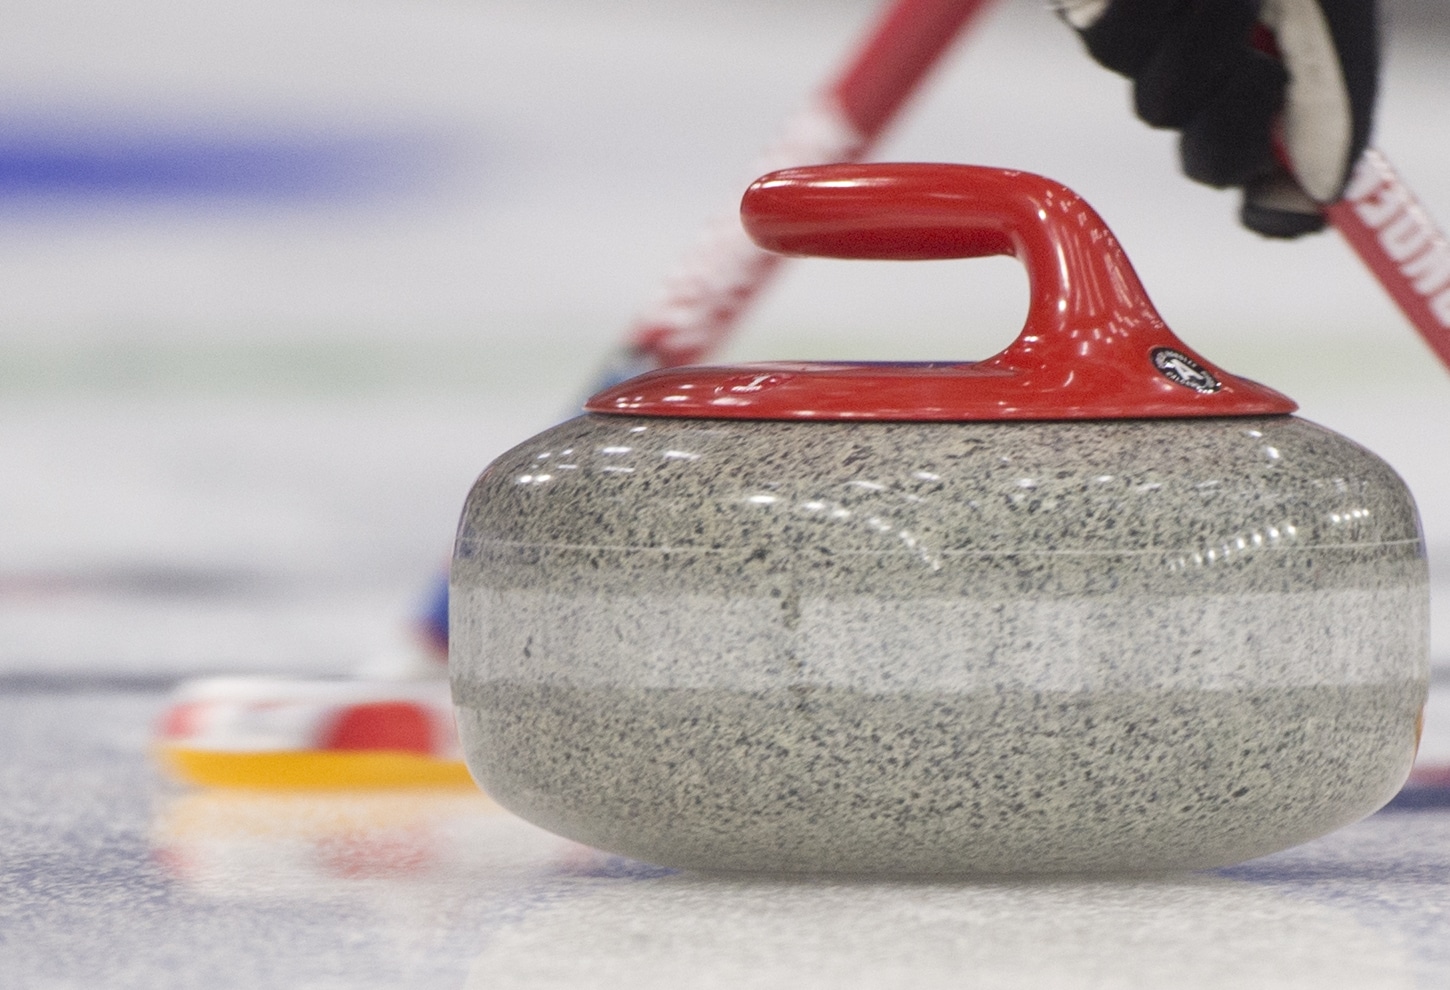 Curling Canada Introducing Curling Canada+!